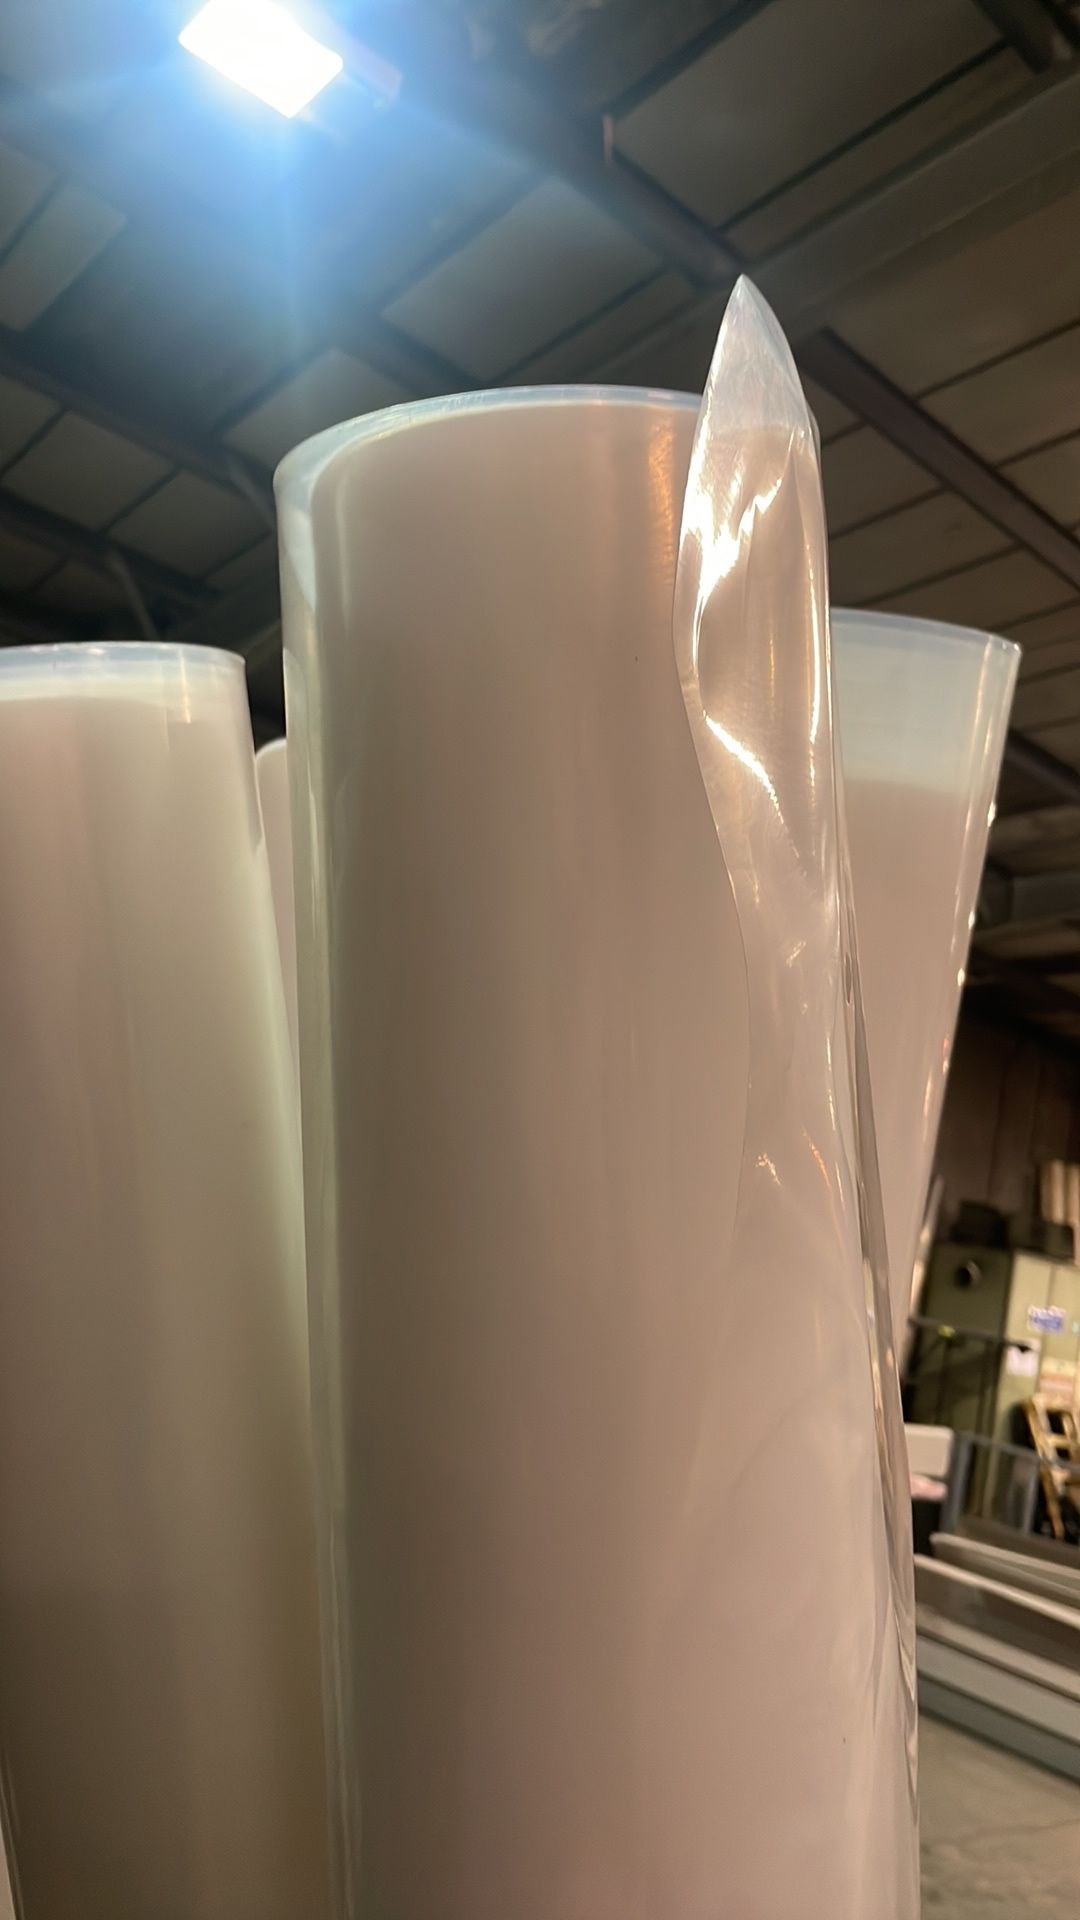 16 x 2m Rolls of Heavy Duty Plastic, Pre-Folded - Image 4 of 4